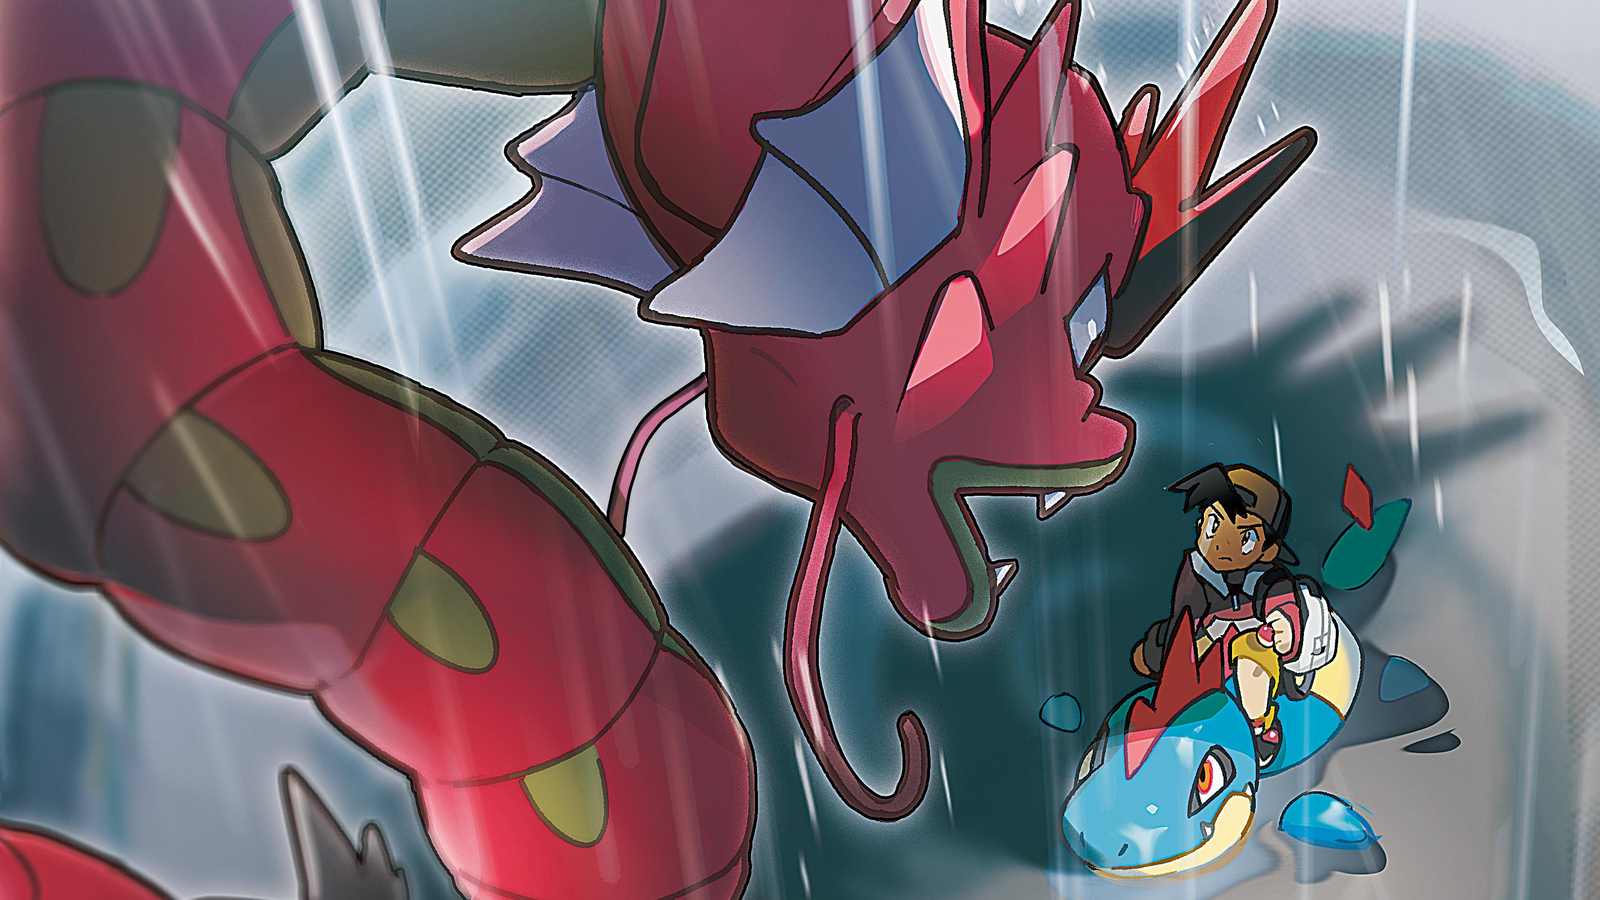 Pokémon Go Johto research quest steps and rewards: How to get Celebi and shiny Gyarados in Pokémon Go